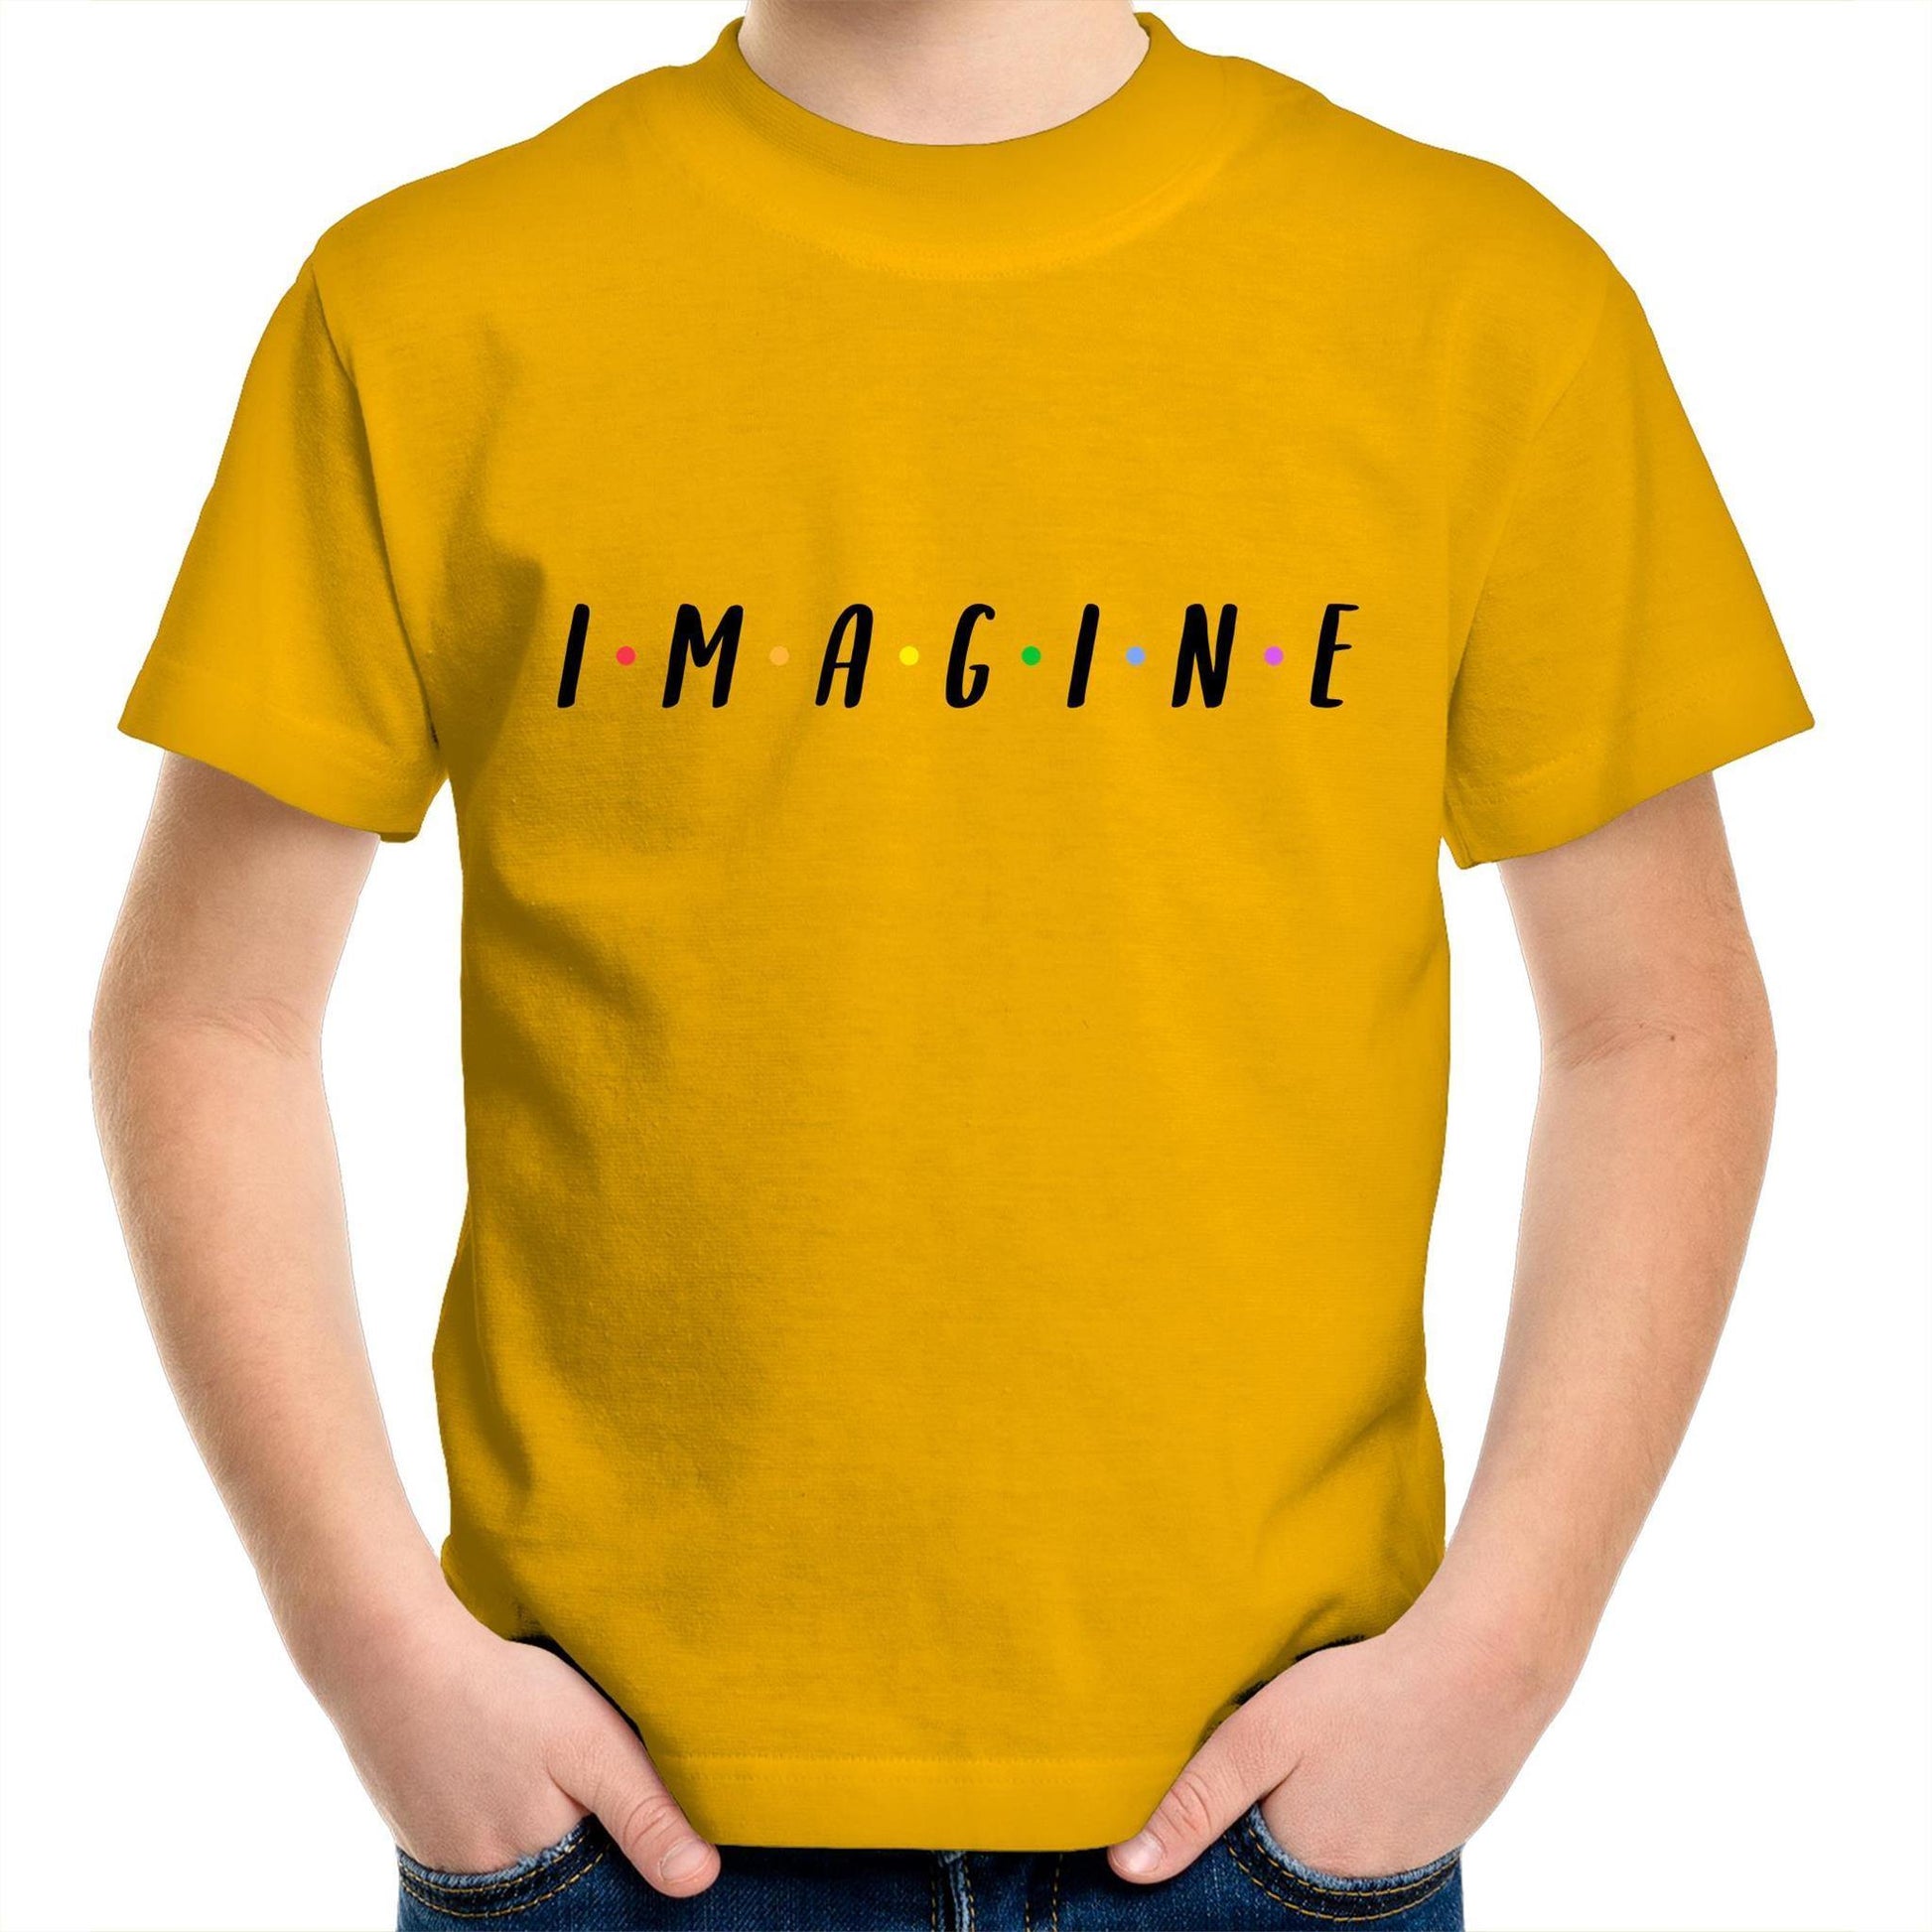 Imagine - Kids Youth Crew T-Shirt Gold Kids Youth T-shirt